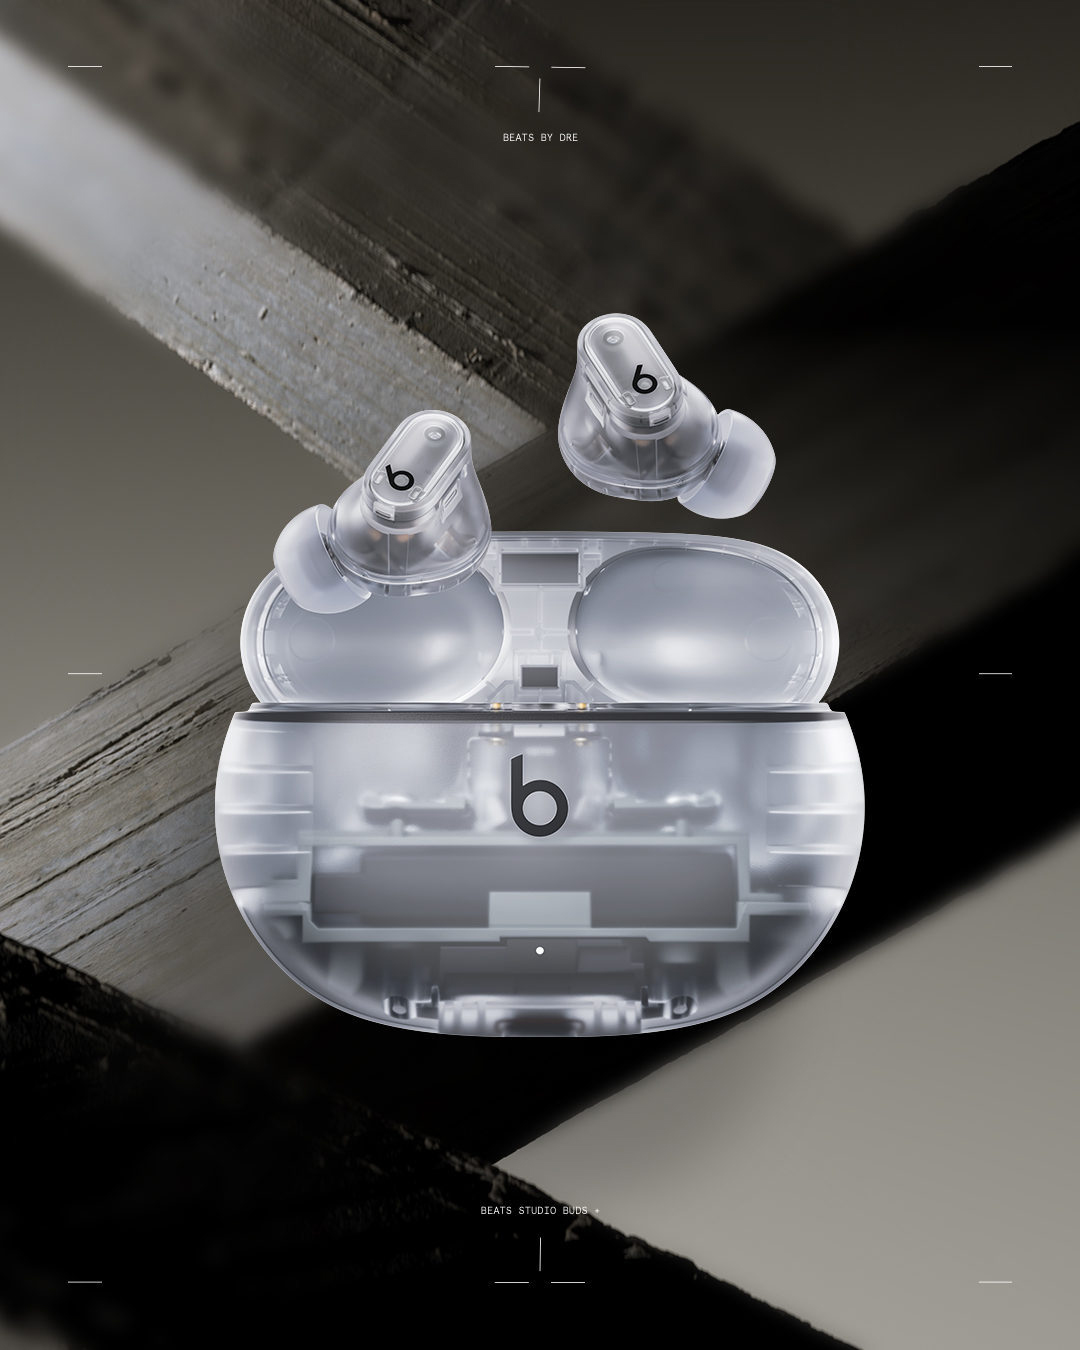 Apple-Beats-By-Dre-Product-3d-Render_04